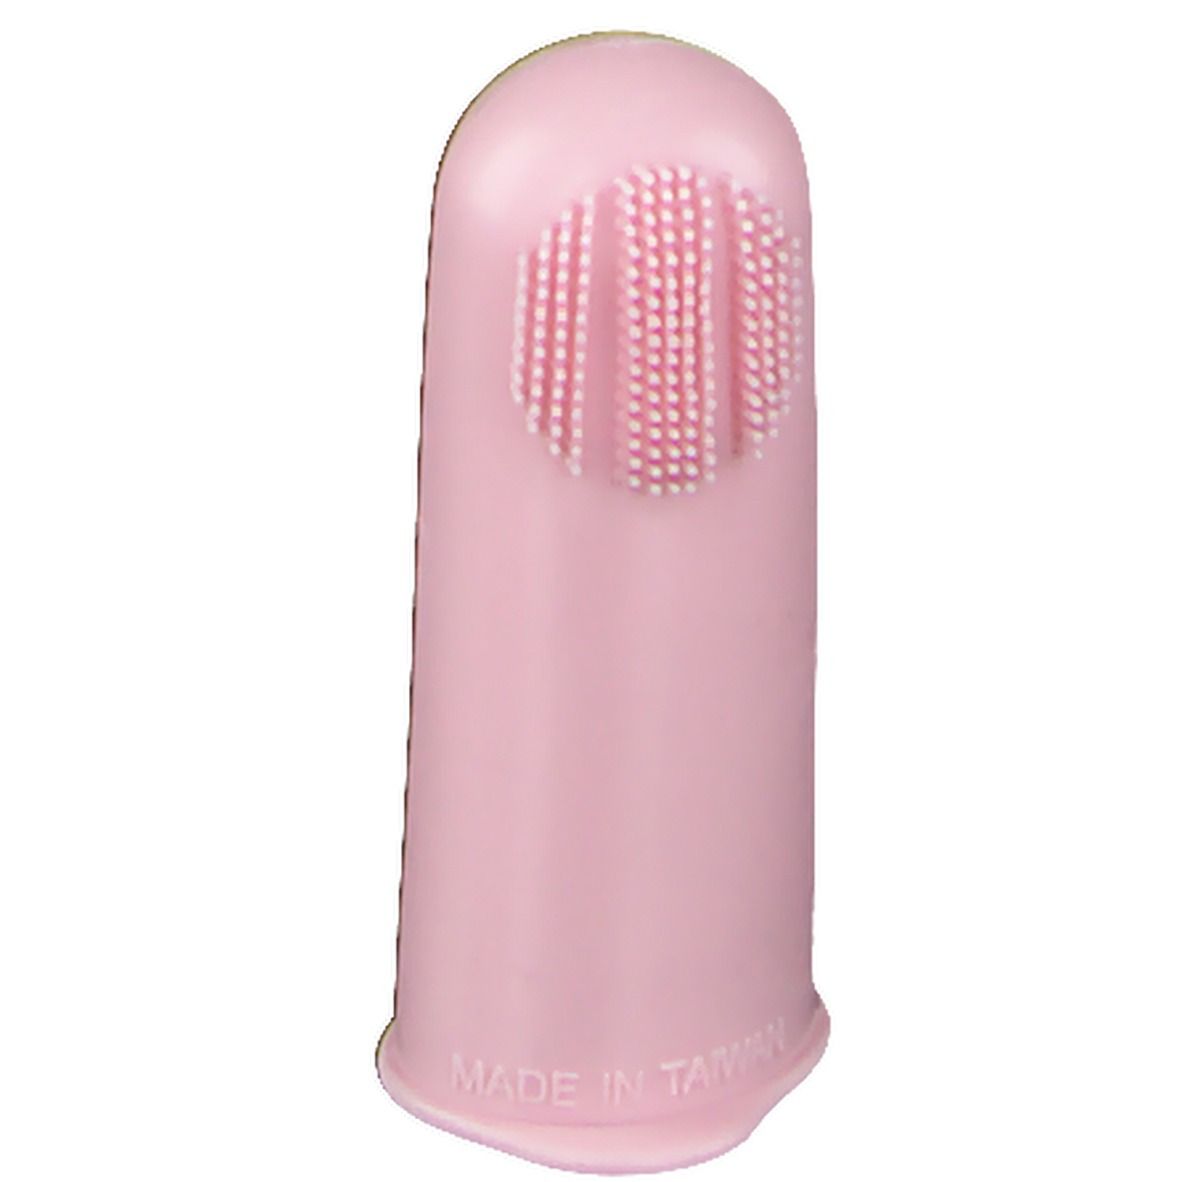 Infa-Dent Fingerzahnbürste (Farbe nicht wählbar)